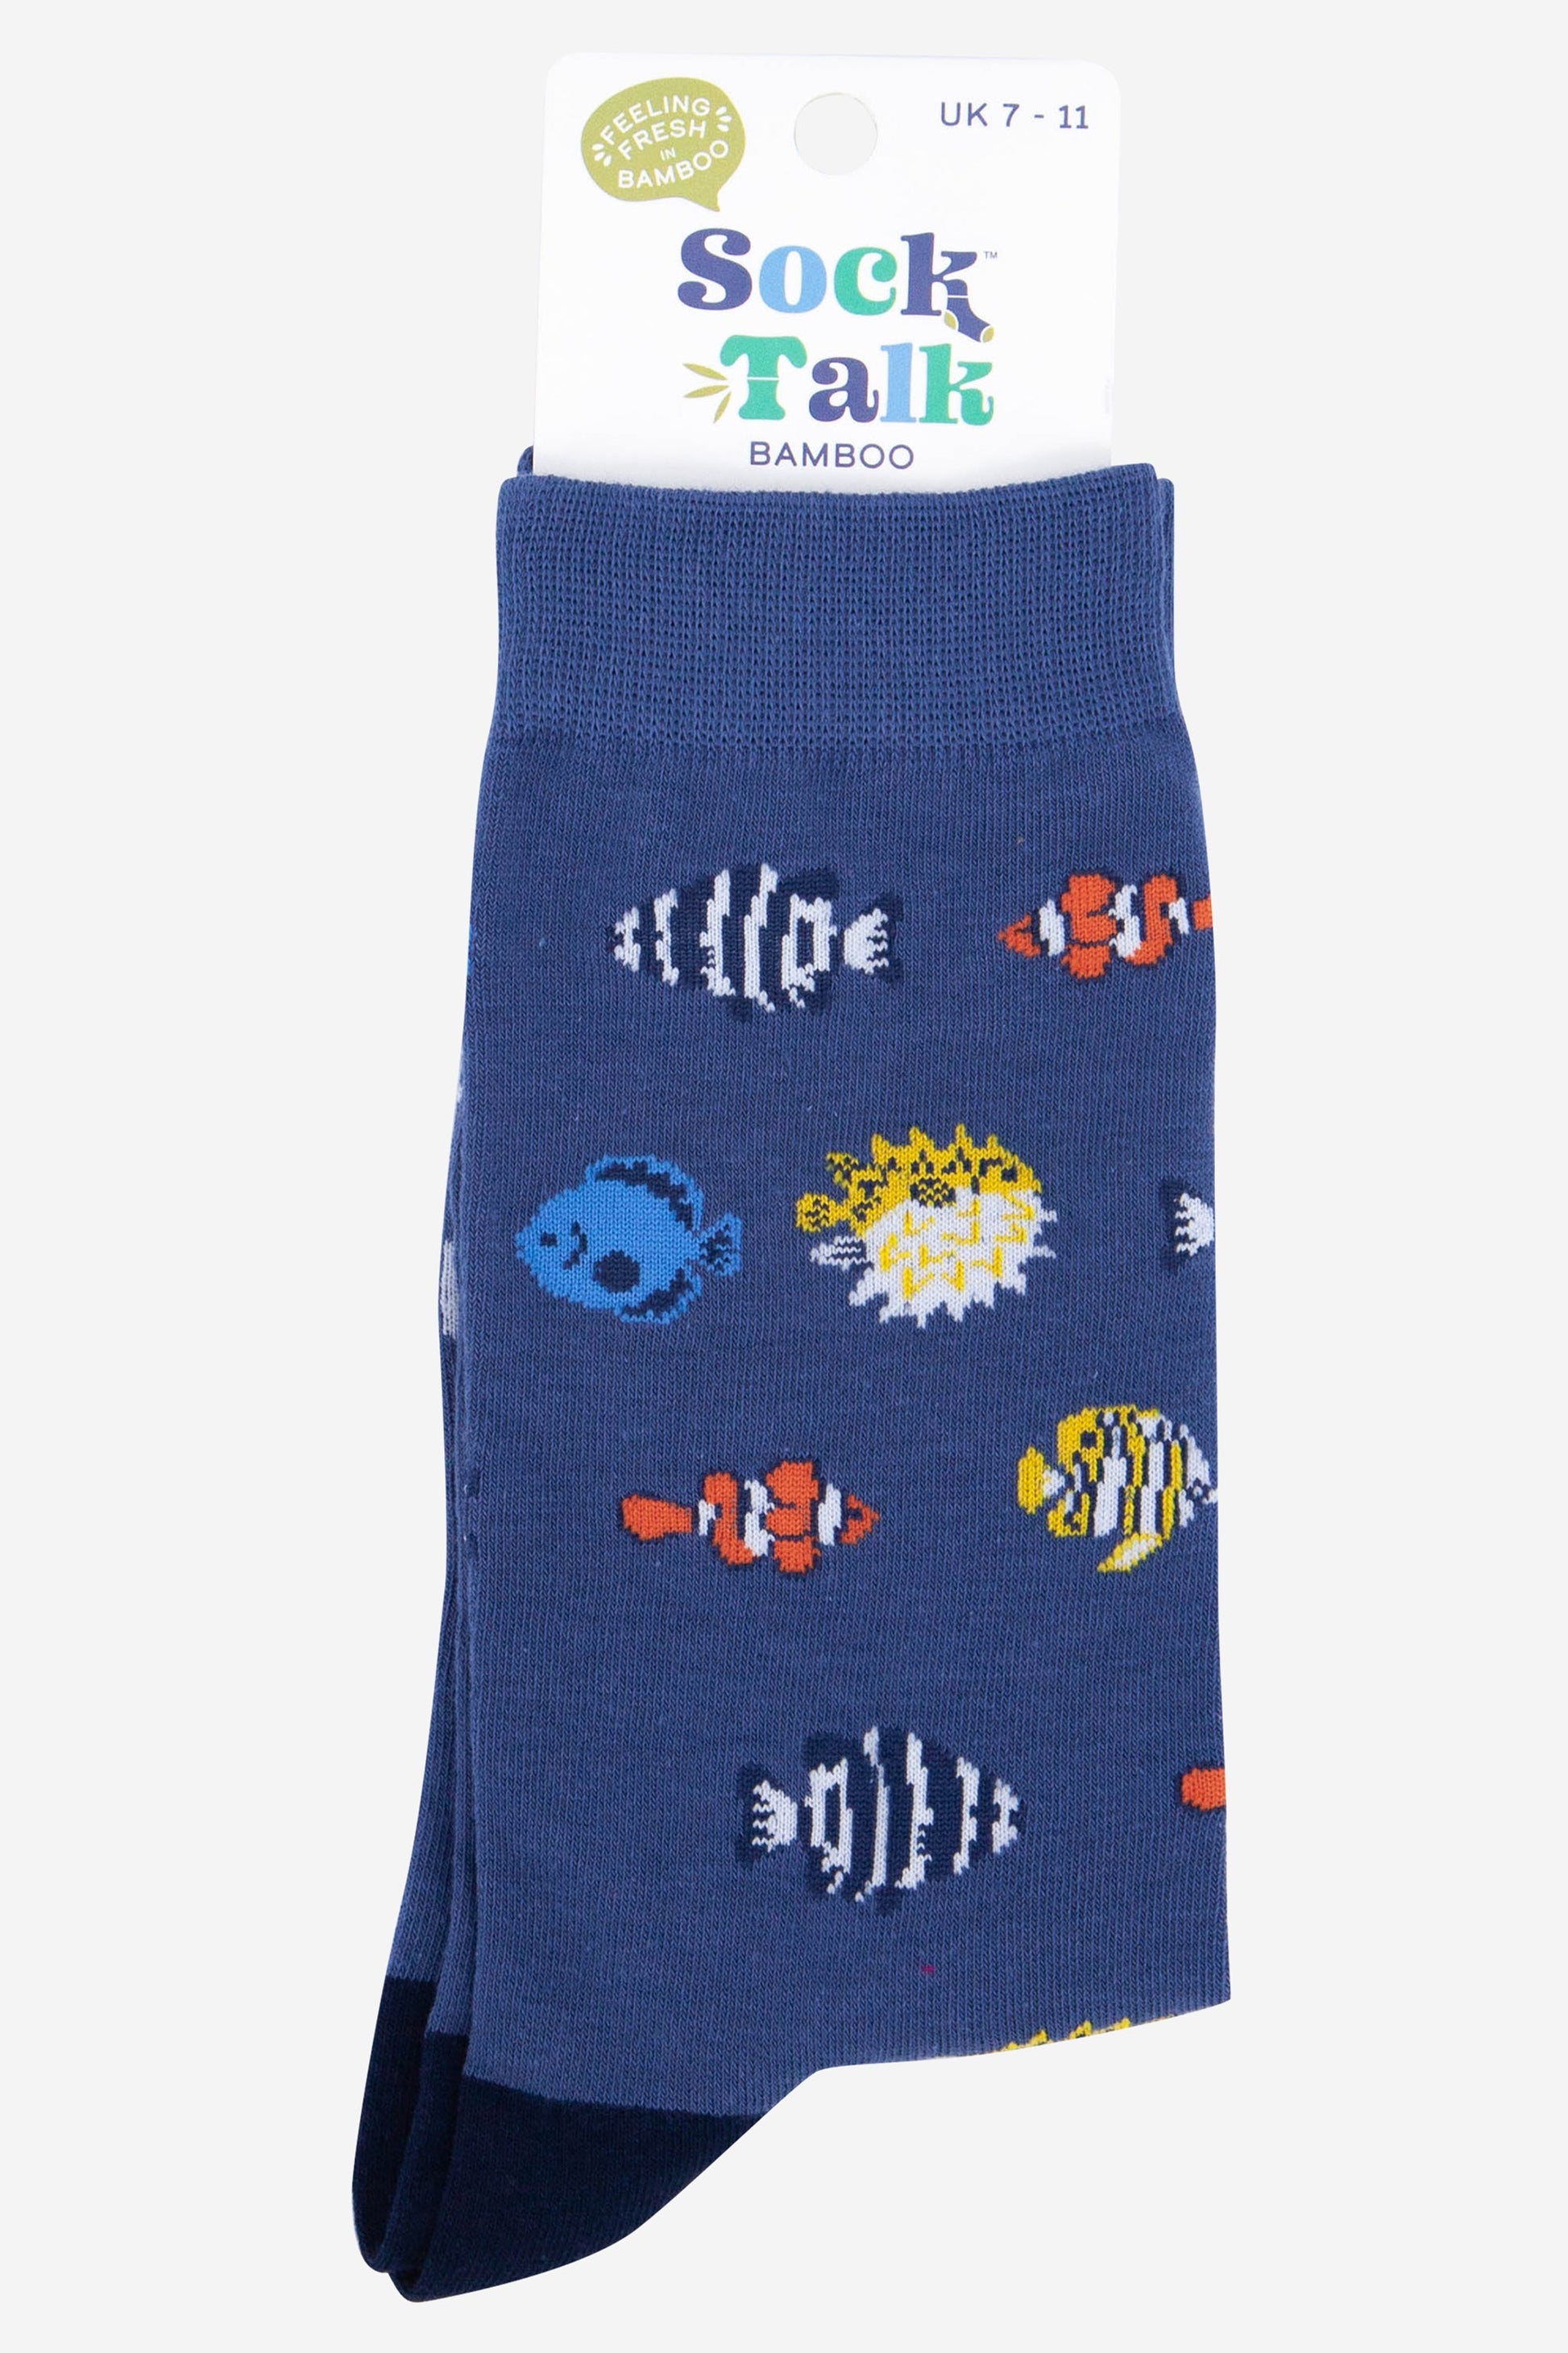 mens multicoloured tropical fish bamboo novelty socks uk size 7-11